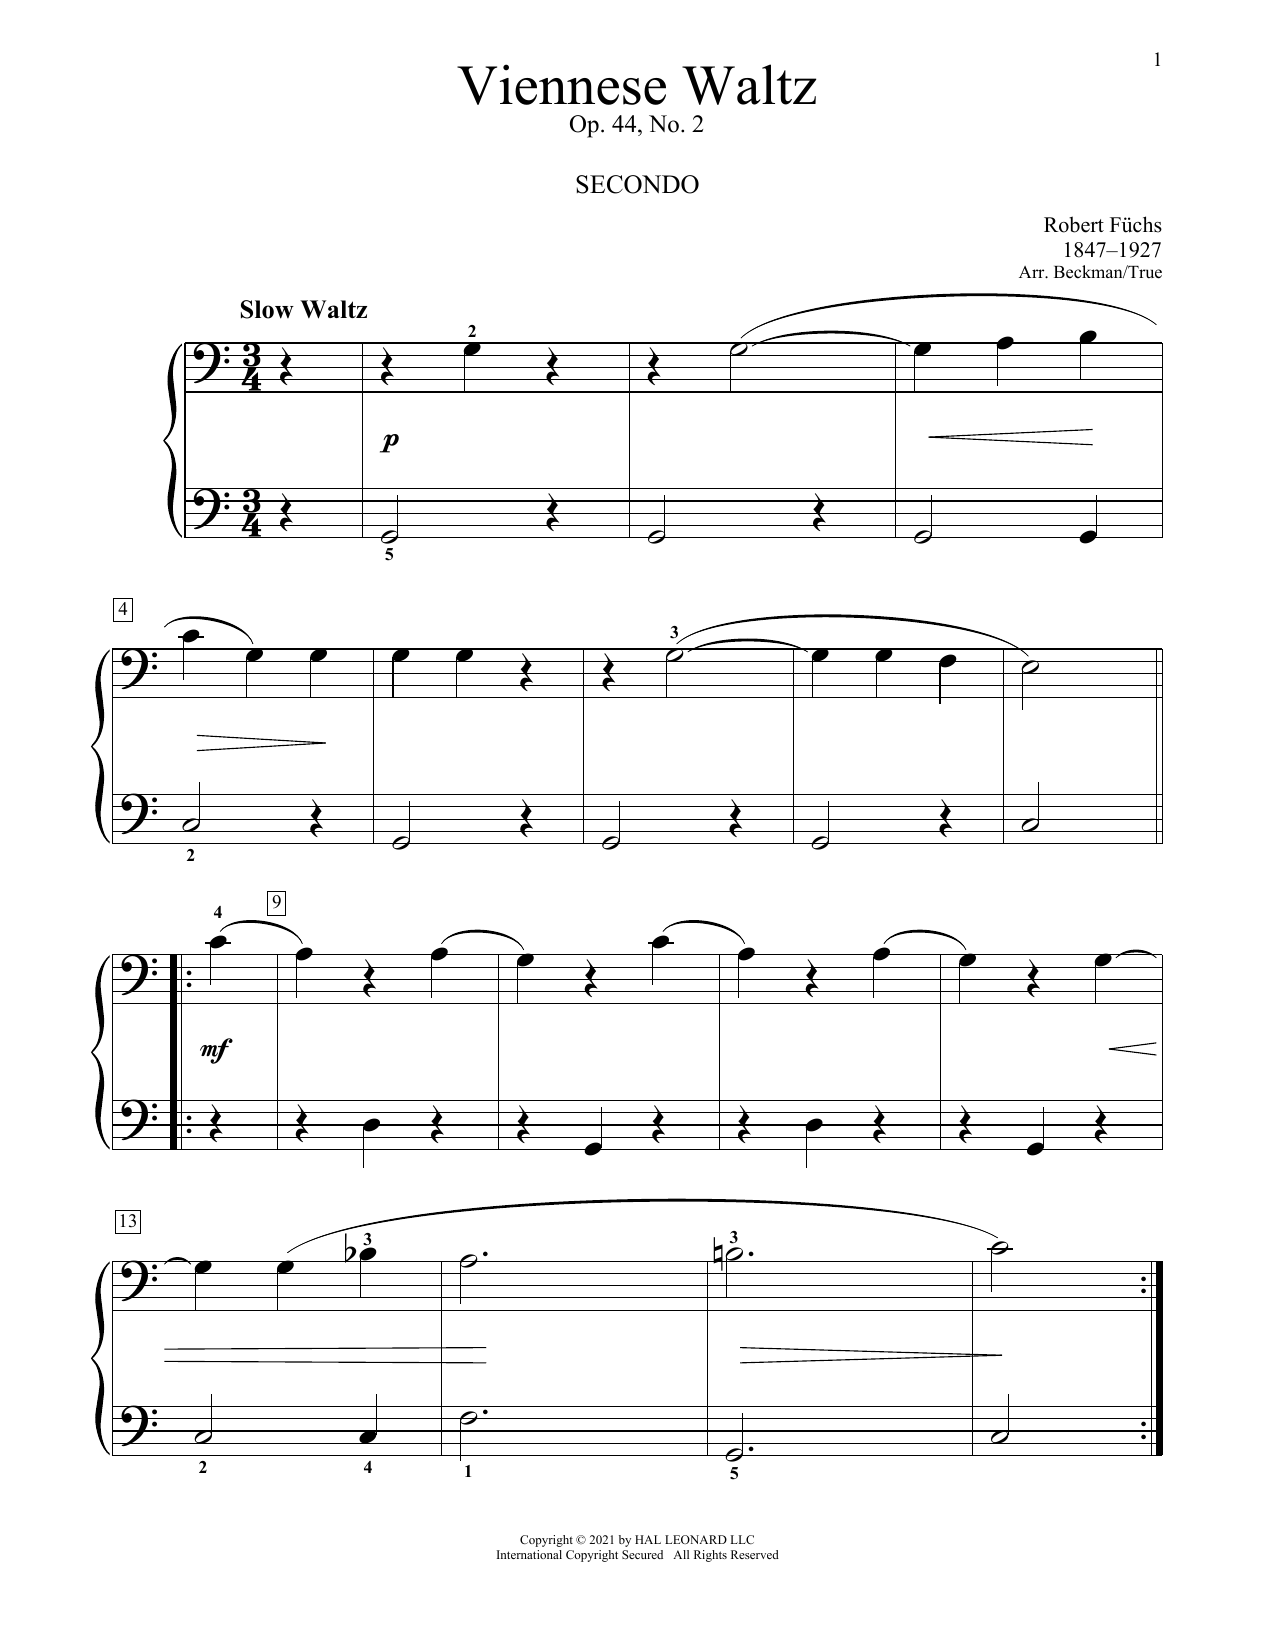 Robert Fuchs Viennese Waltz, Op. 44, No. 2 Sheet Music Notes & Chords for Piano Duet - Download or Print PDF